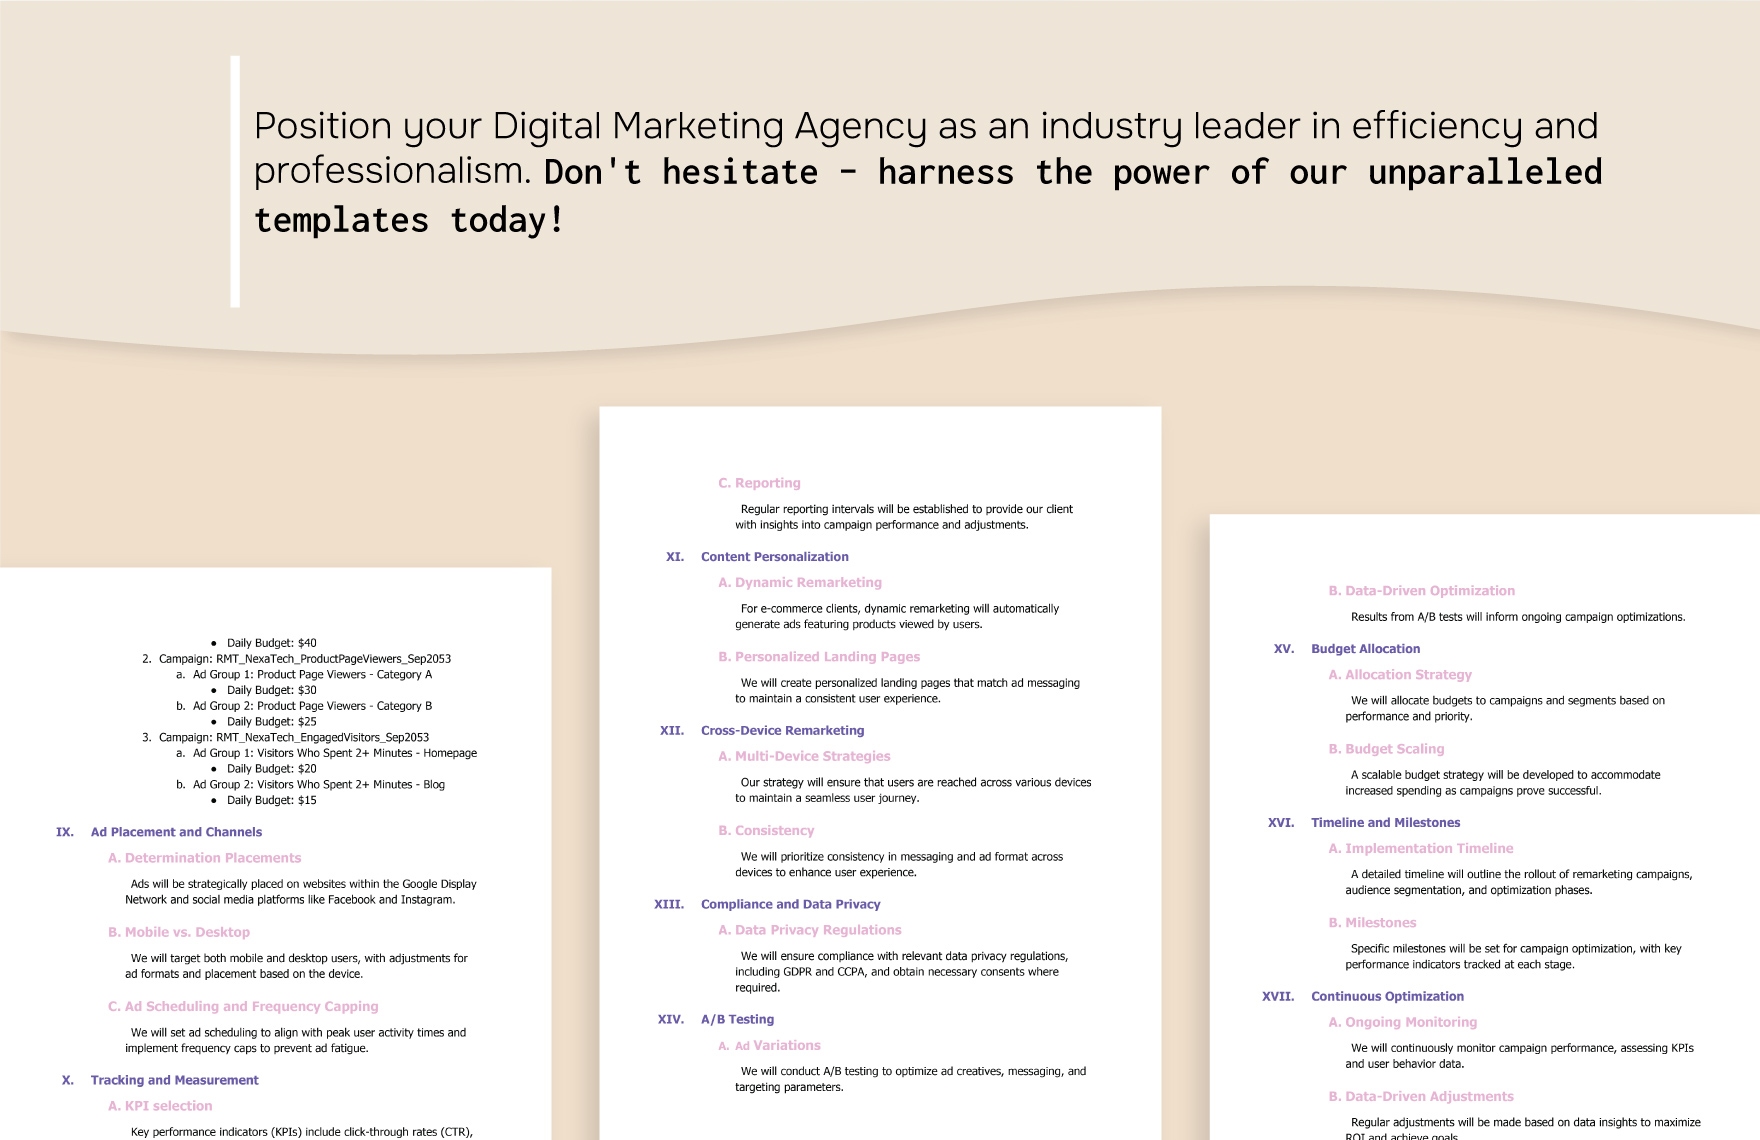 Digital Marketing Agency Remarketing Strategy Template